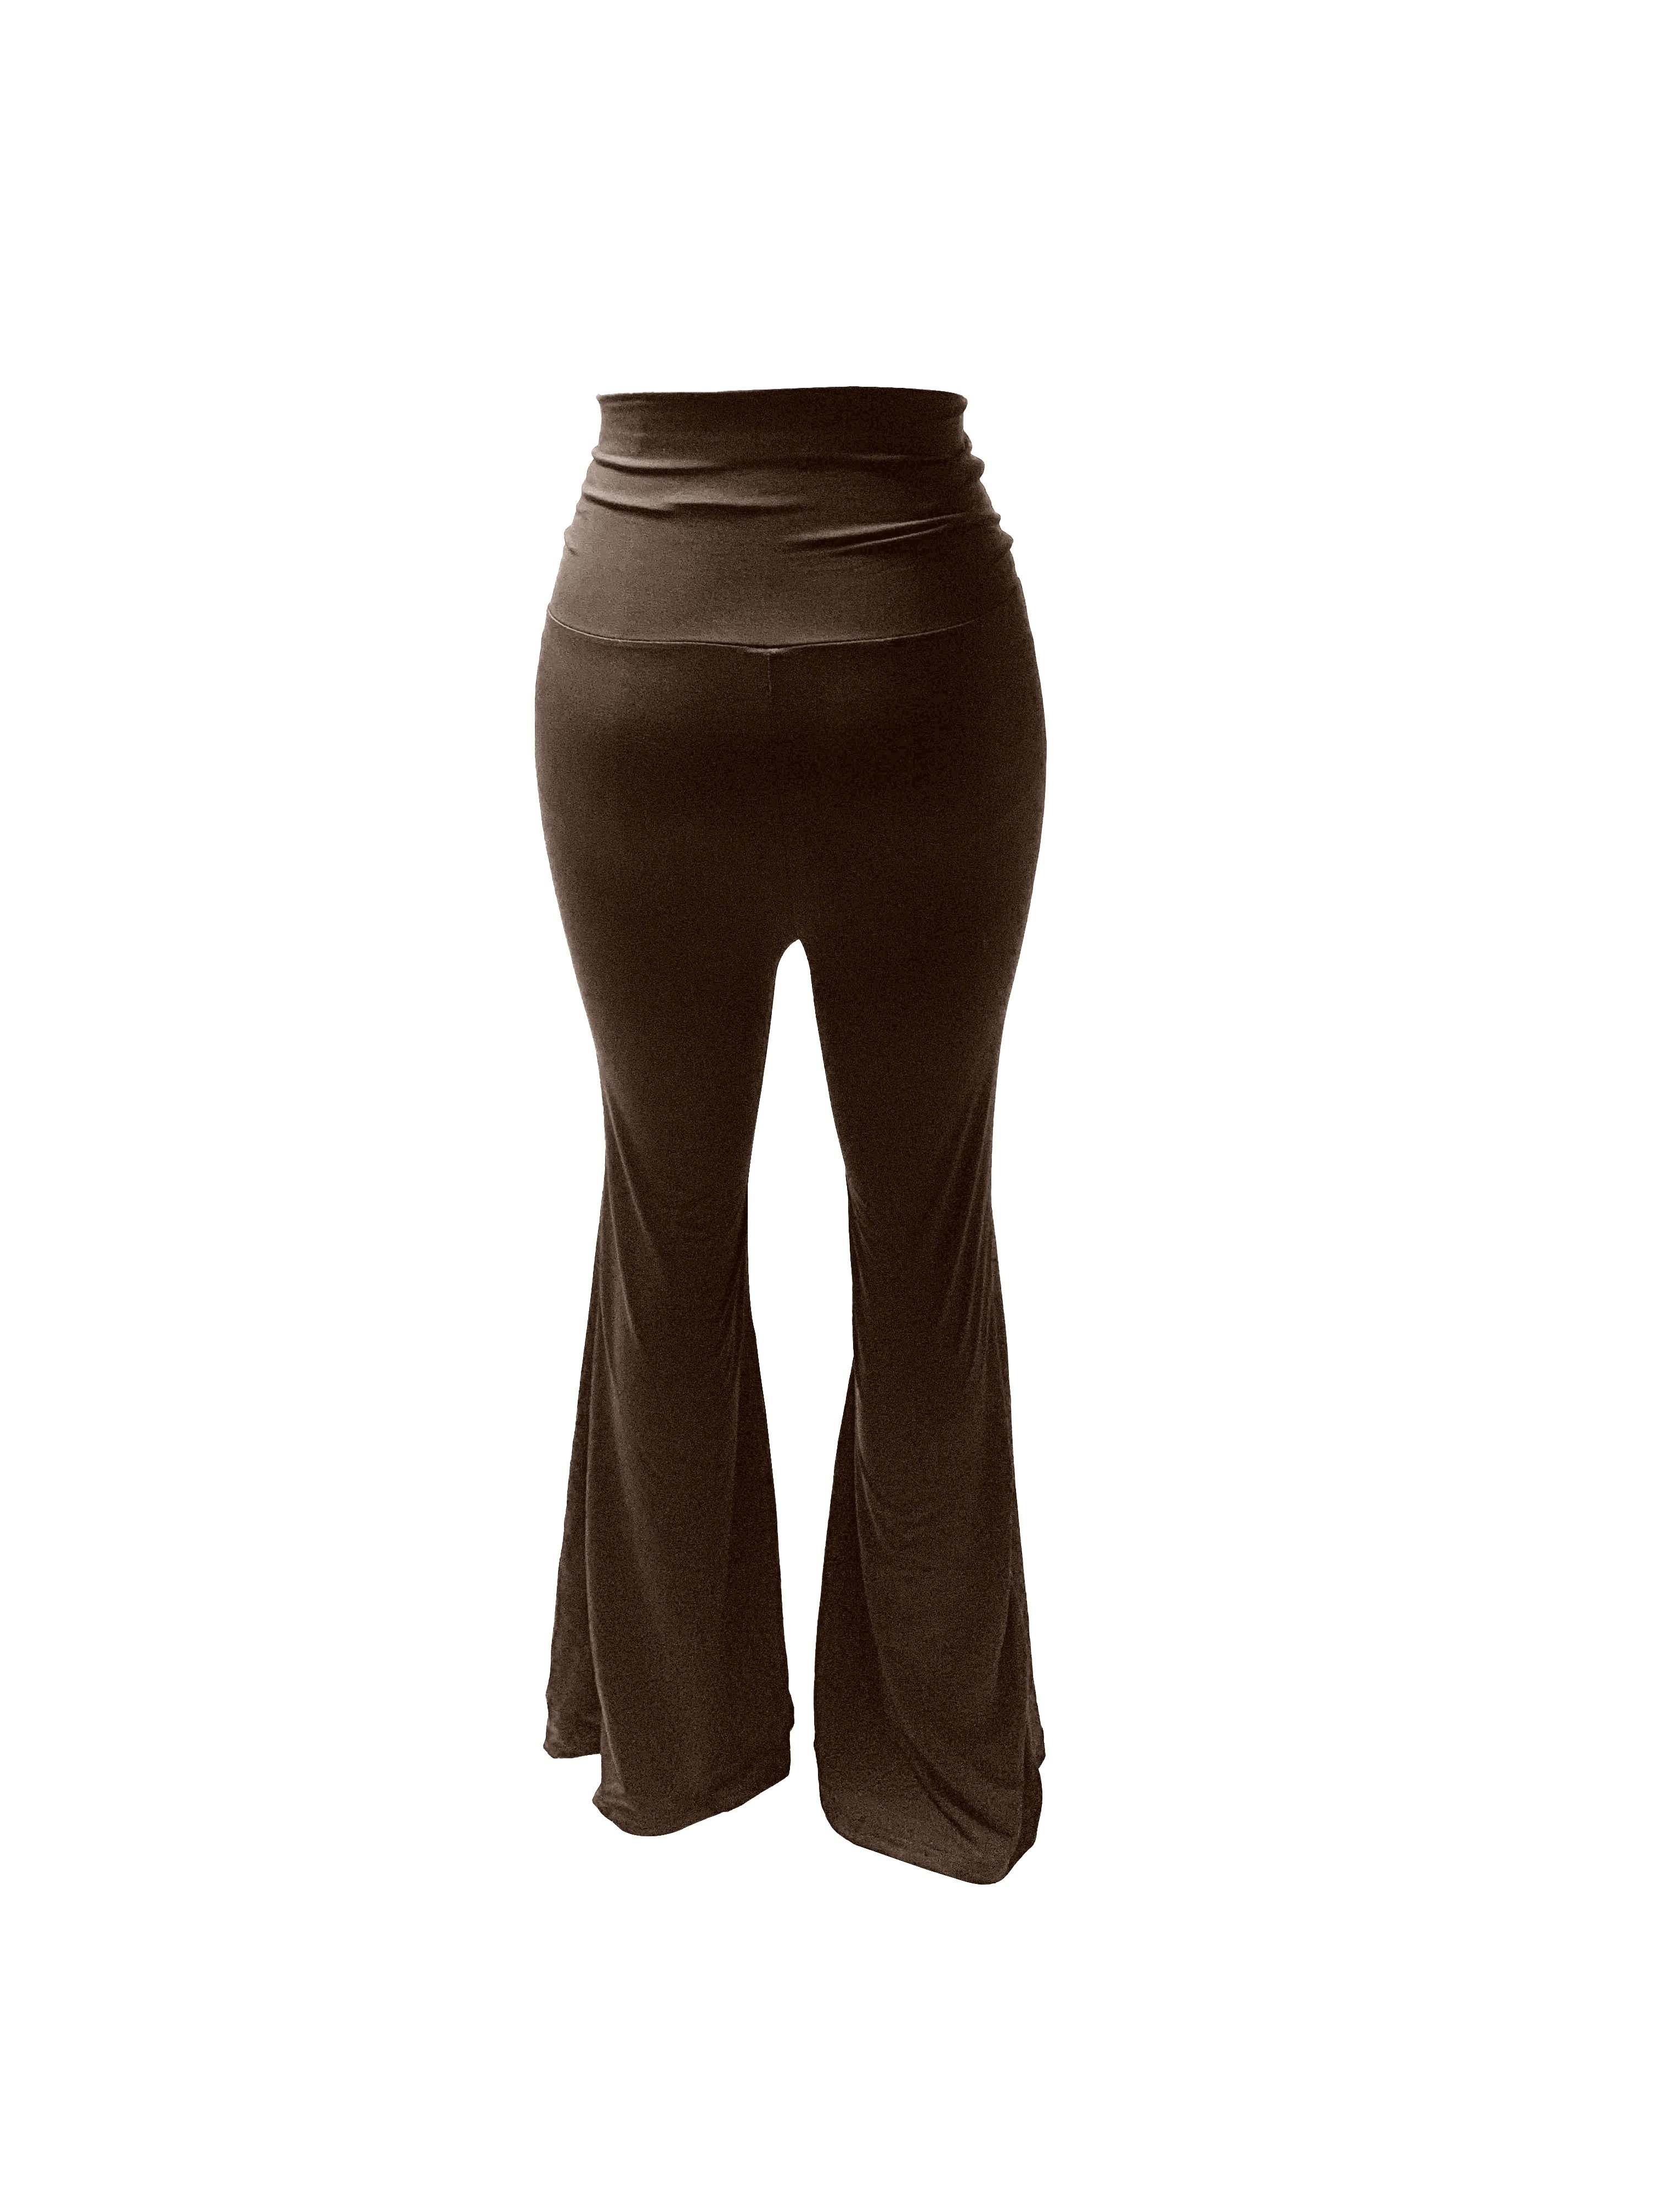 Hobemty Women's Work High Waist Flare Leg Stretchy Bell Pants Brown Large :  Target